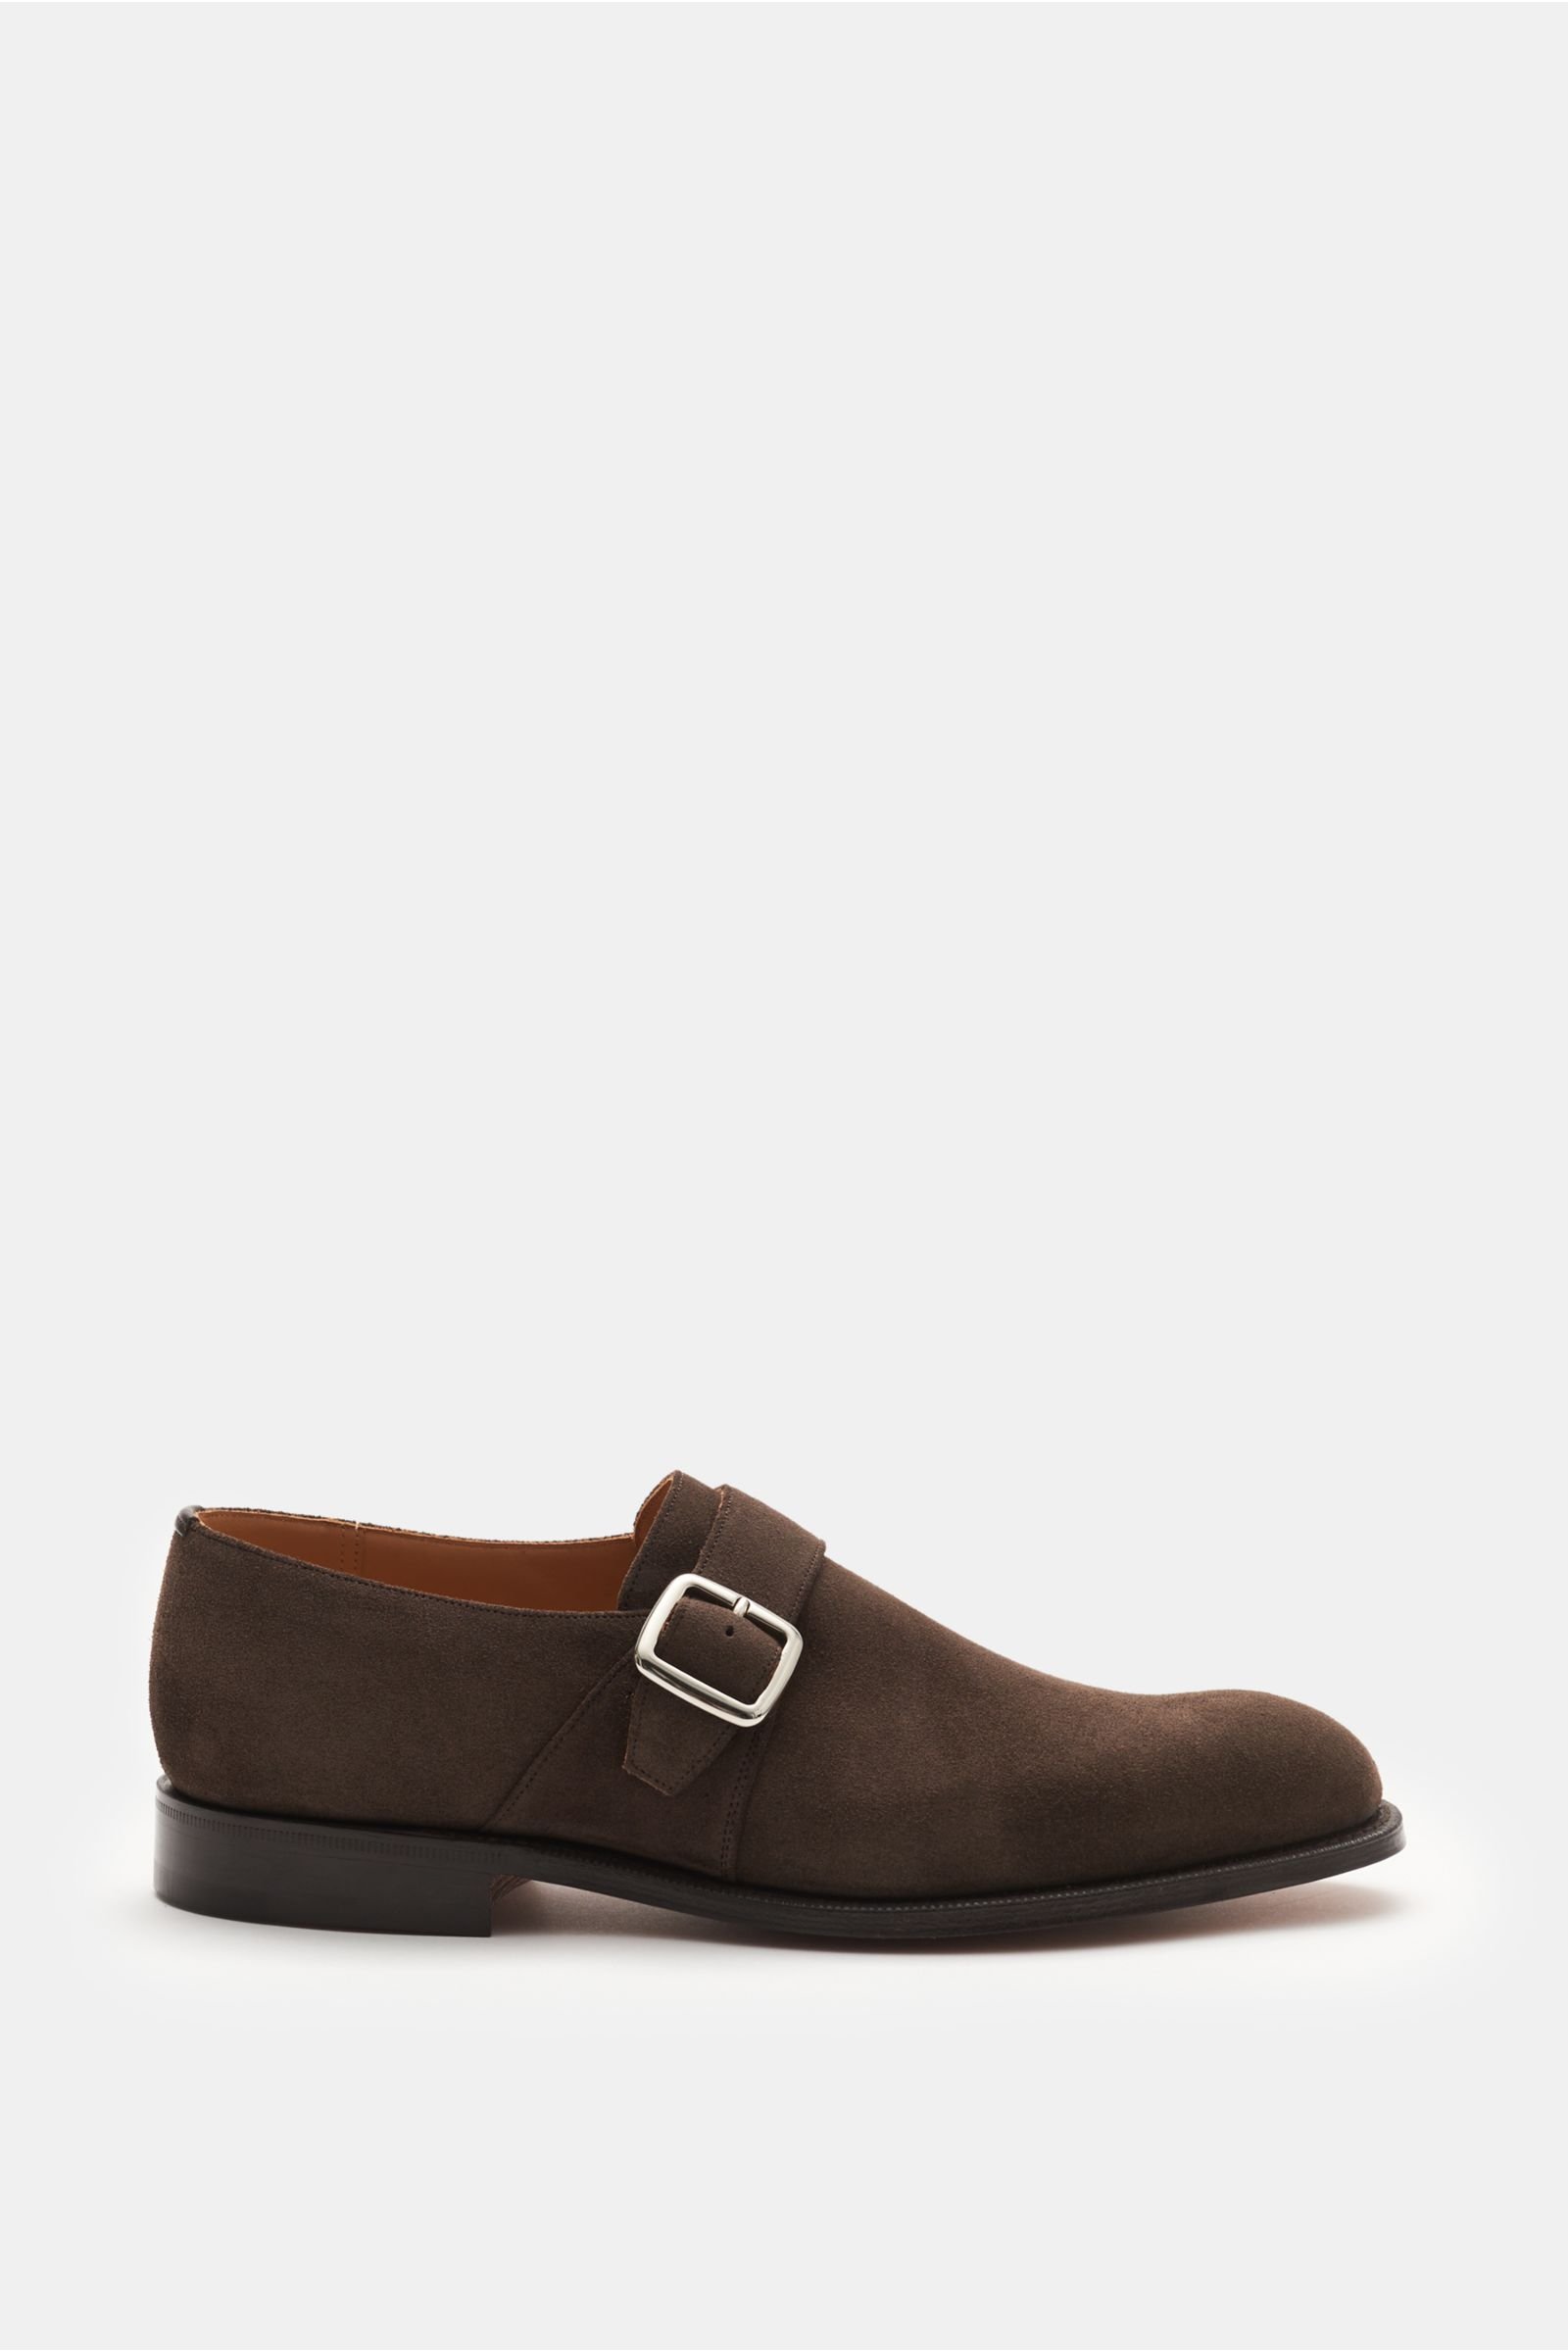 Monk shoes 'Westbury' grey-brown